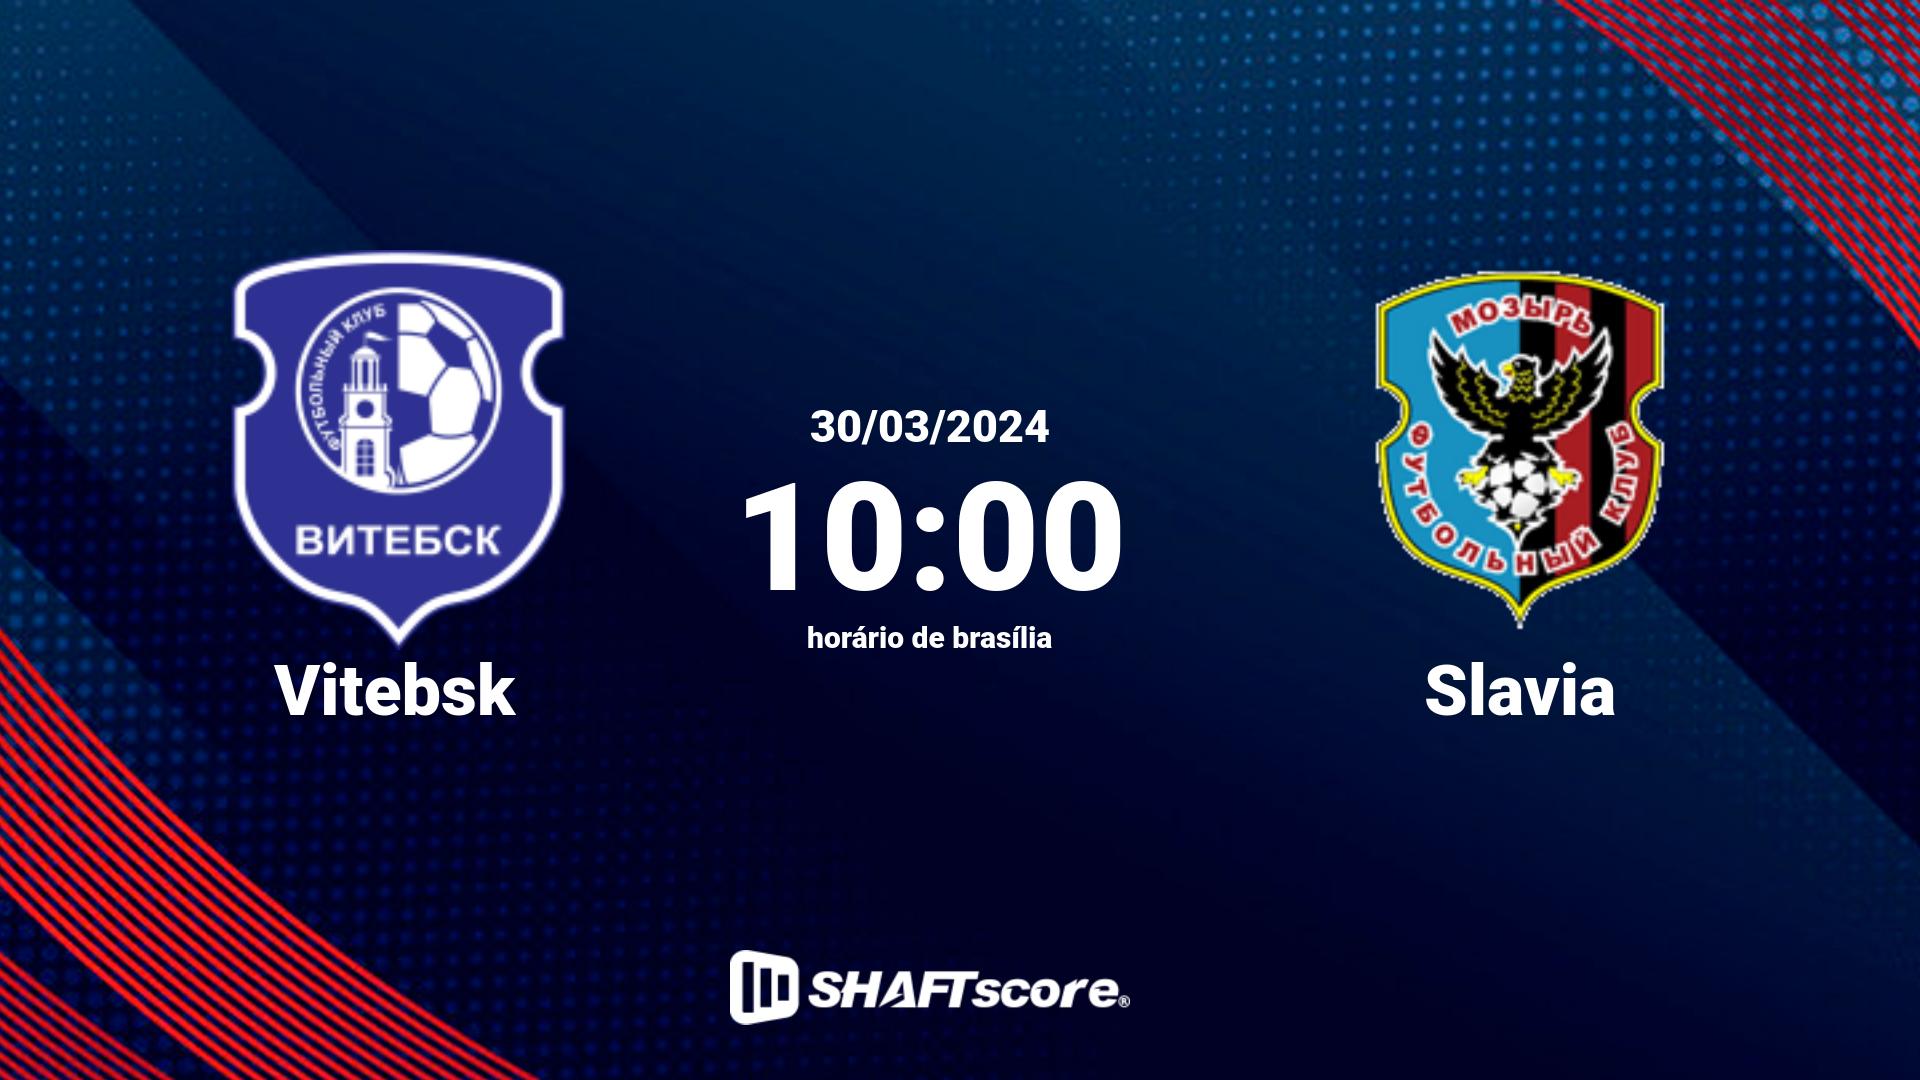 Estatísticas do jogo Vitebsk vs Slavia 30.03 10:00